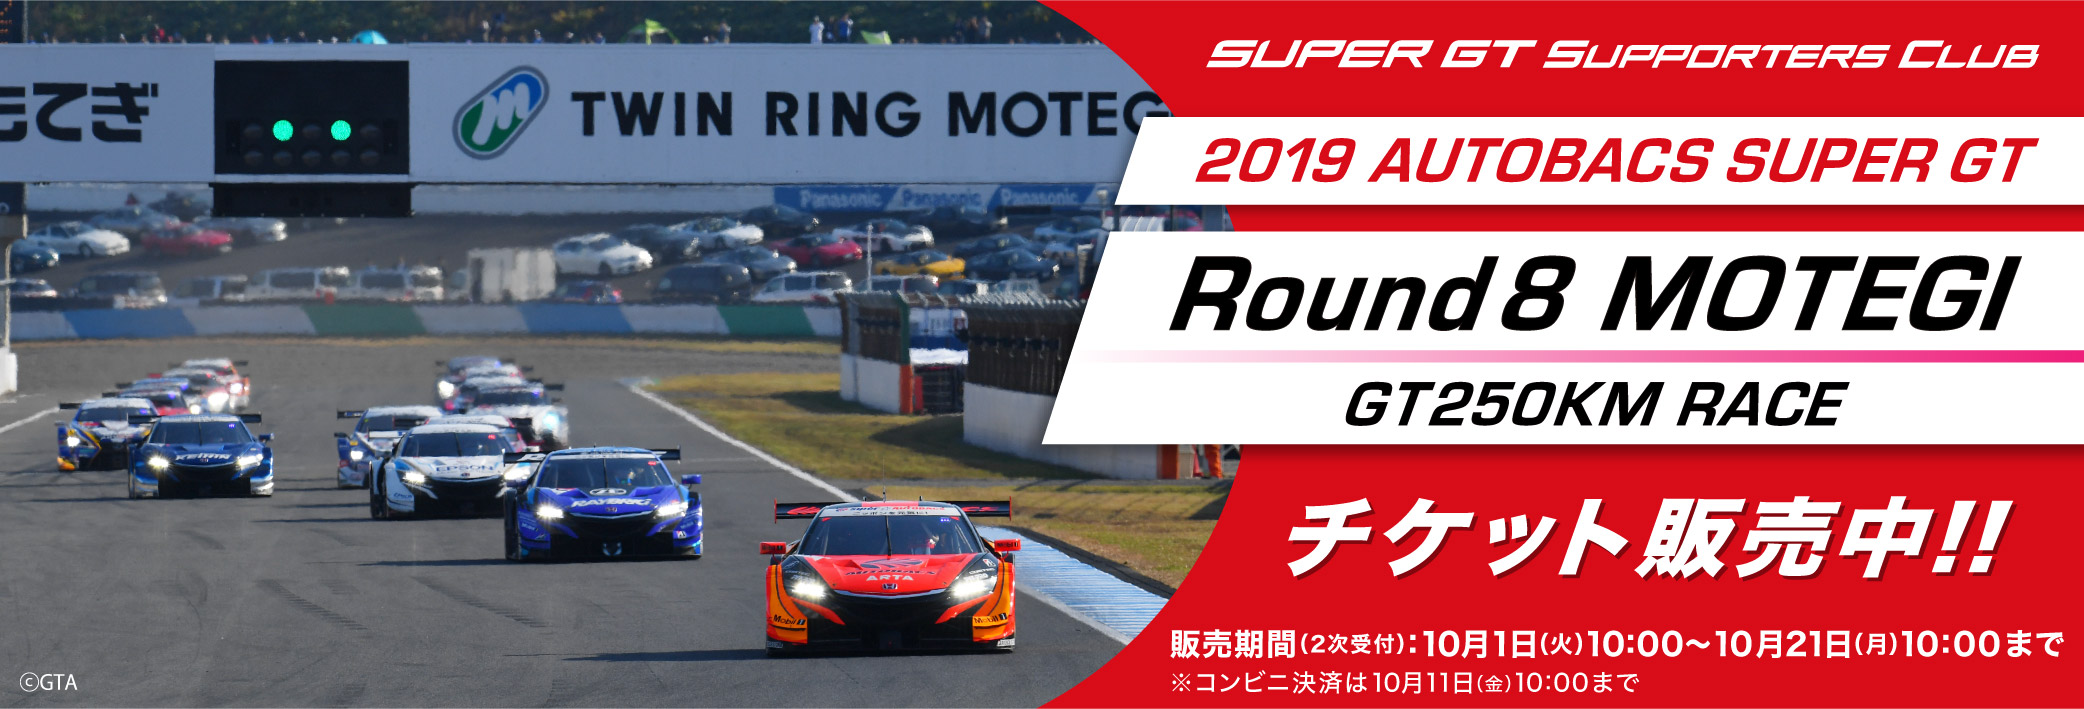 2019 AUTOBACS SUPER GT Rd.8 MOTEGI GT 250KM RACE チケット販売のご 